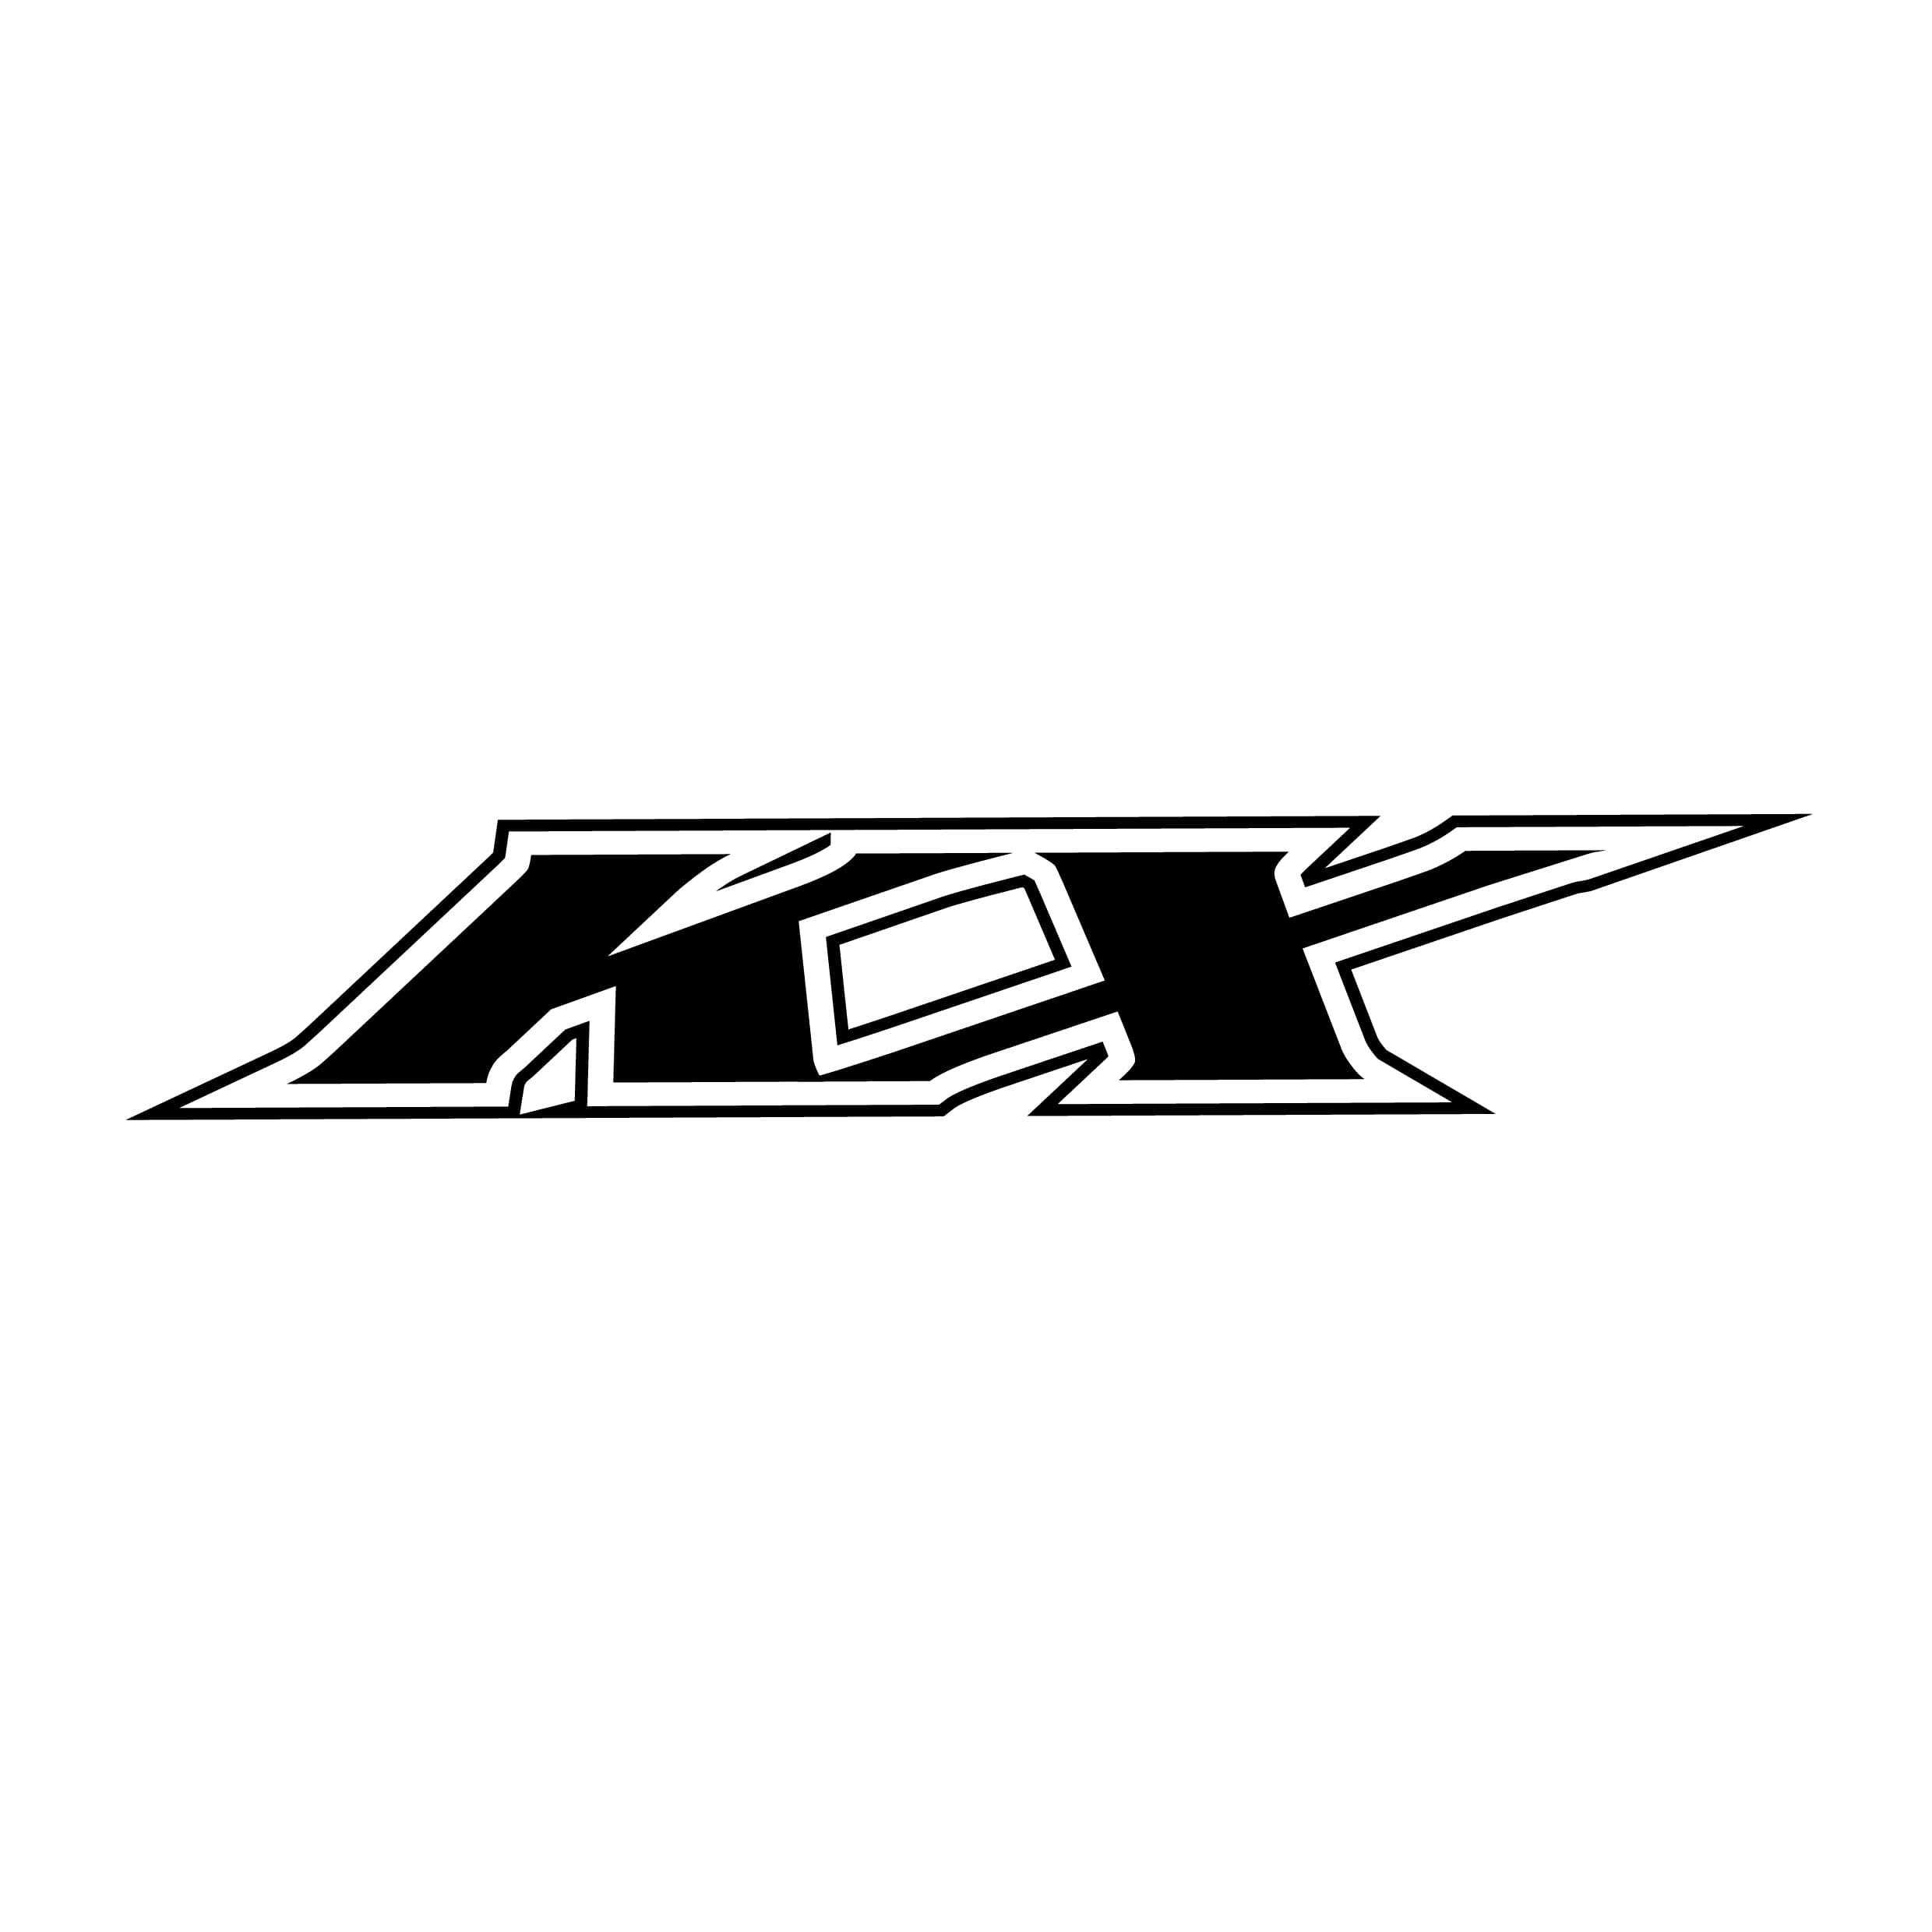 stickers-kawasaki-KX-ref53-autocollant-moto-sticker-deux-roue-autocollants-decals-sponsors-tuning-sport-logo-bike-scooter-min